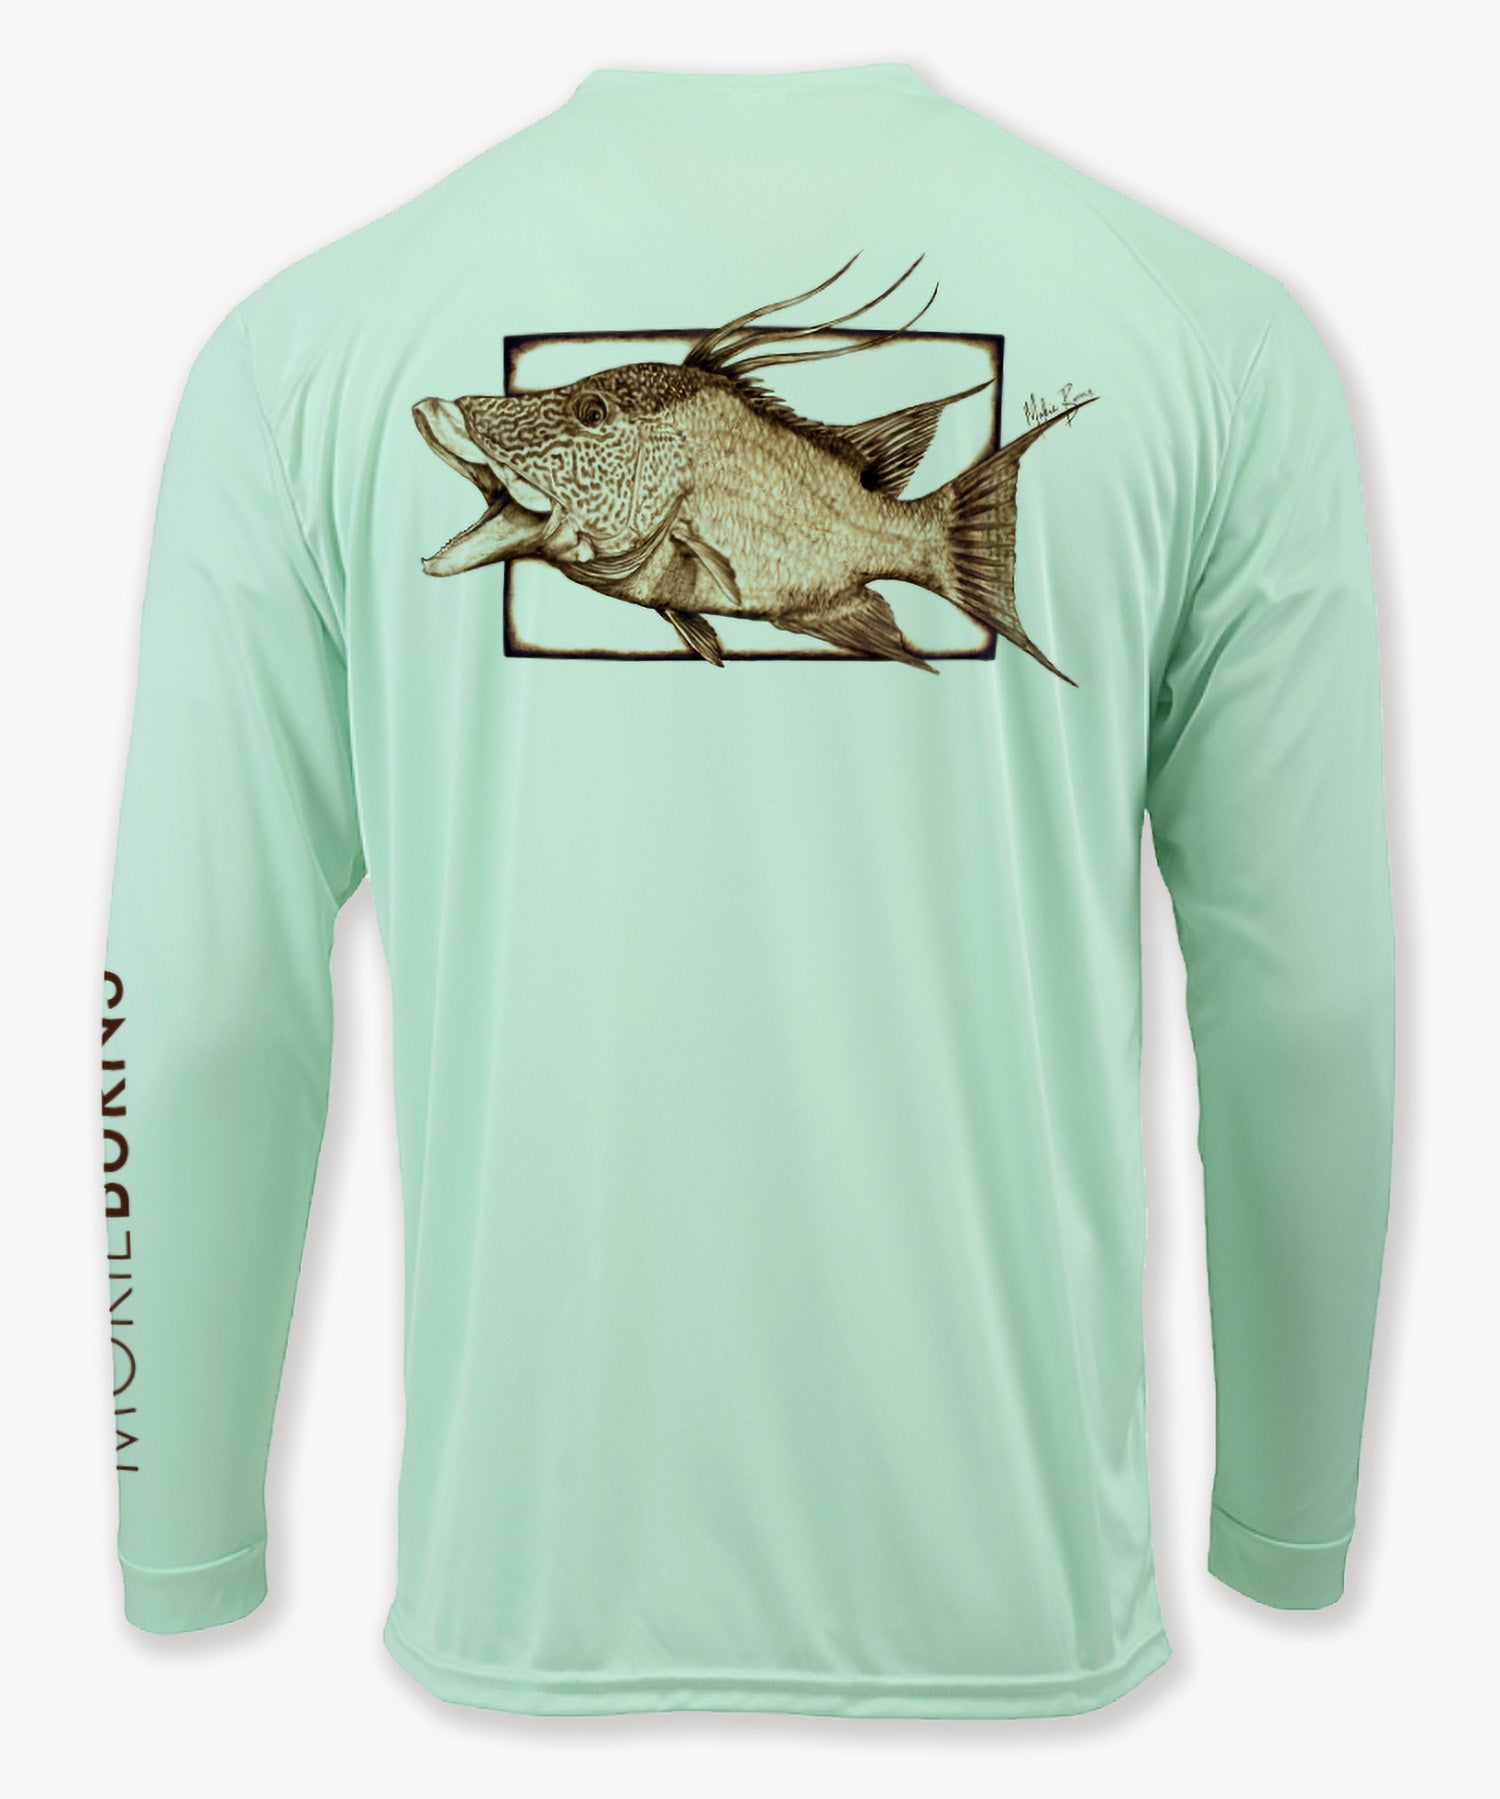 Mens Performance Fishing Shirt - Hogfish Pale Yellow / S